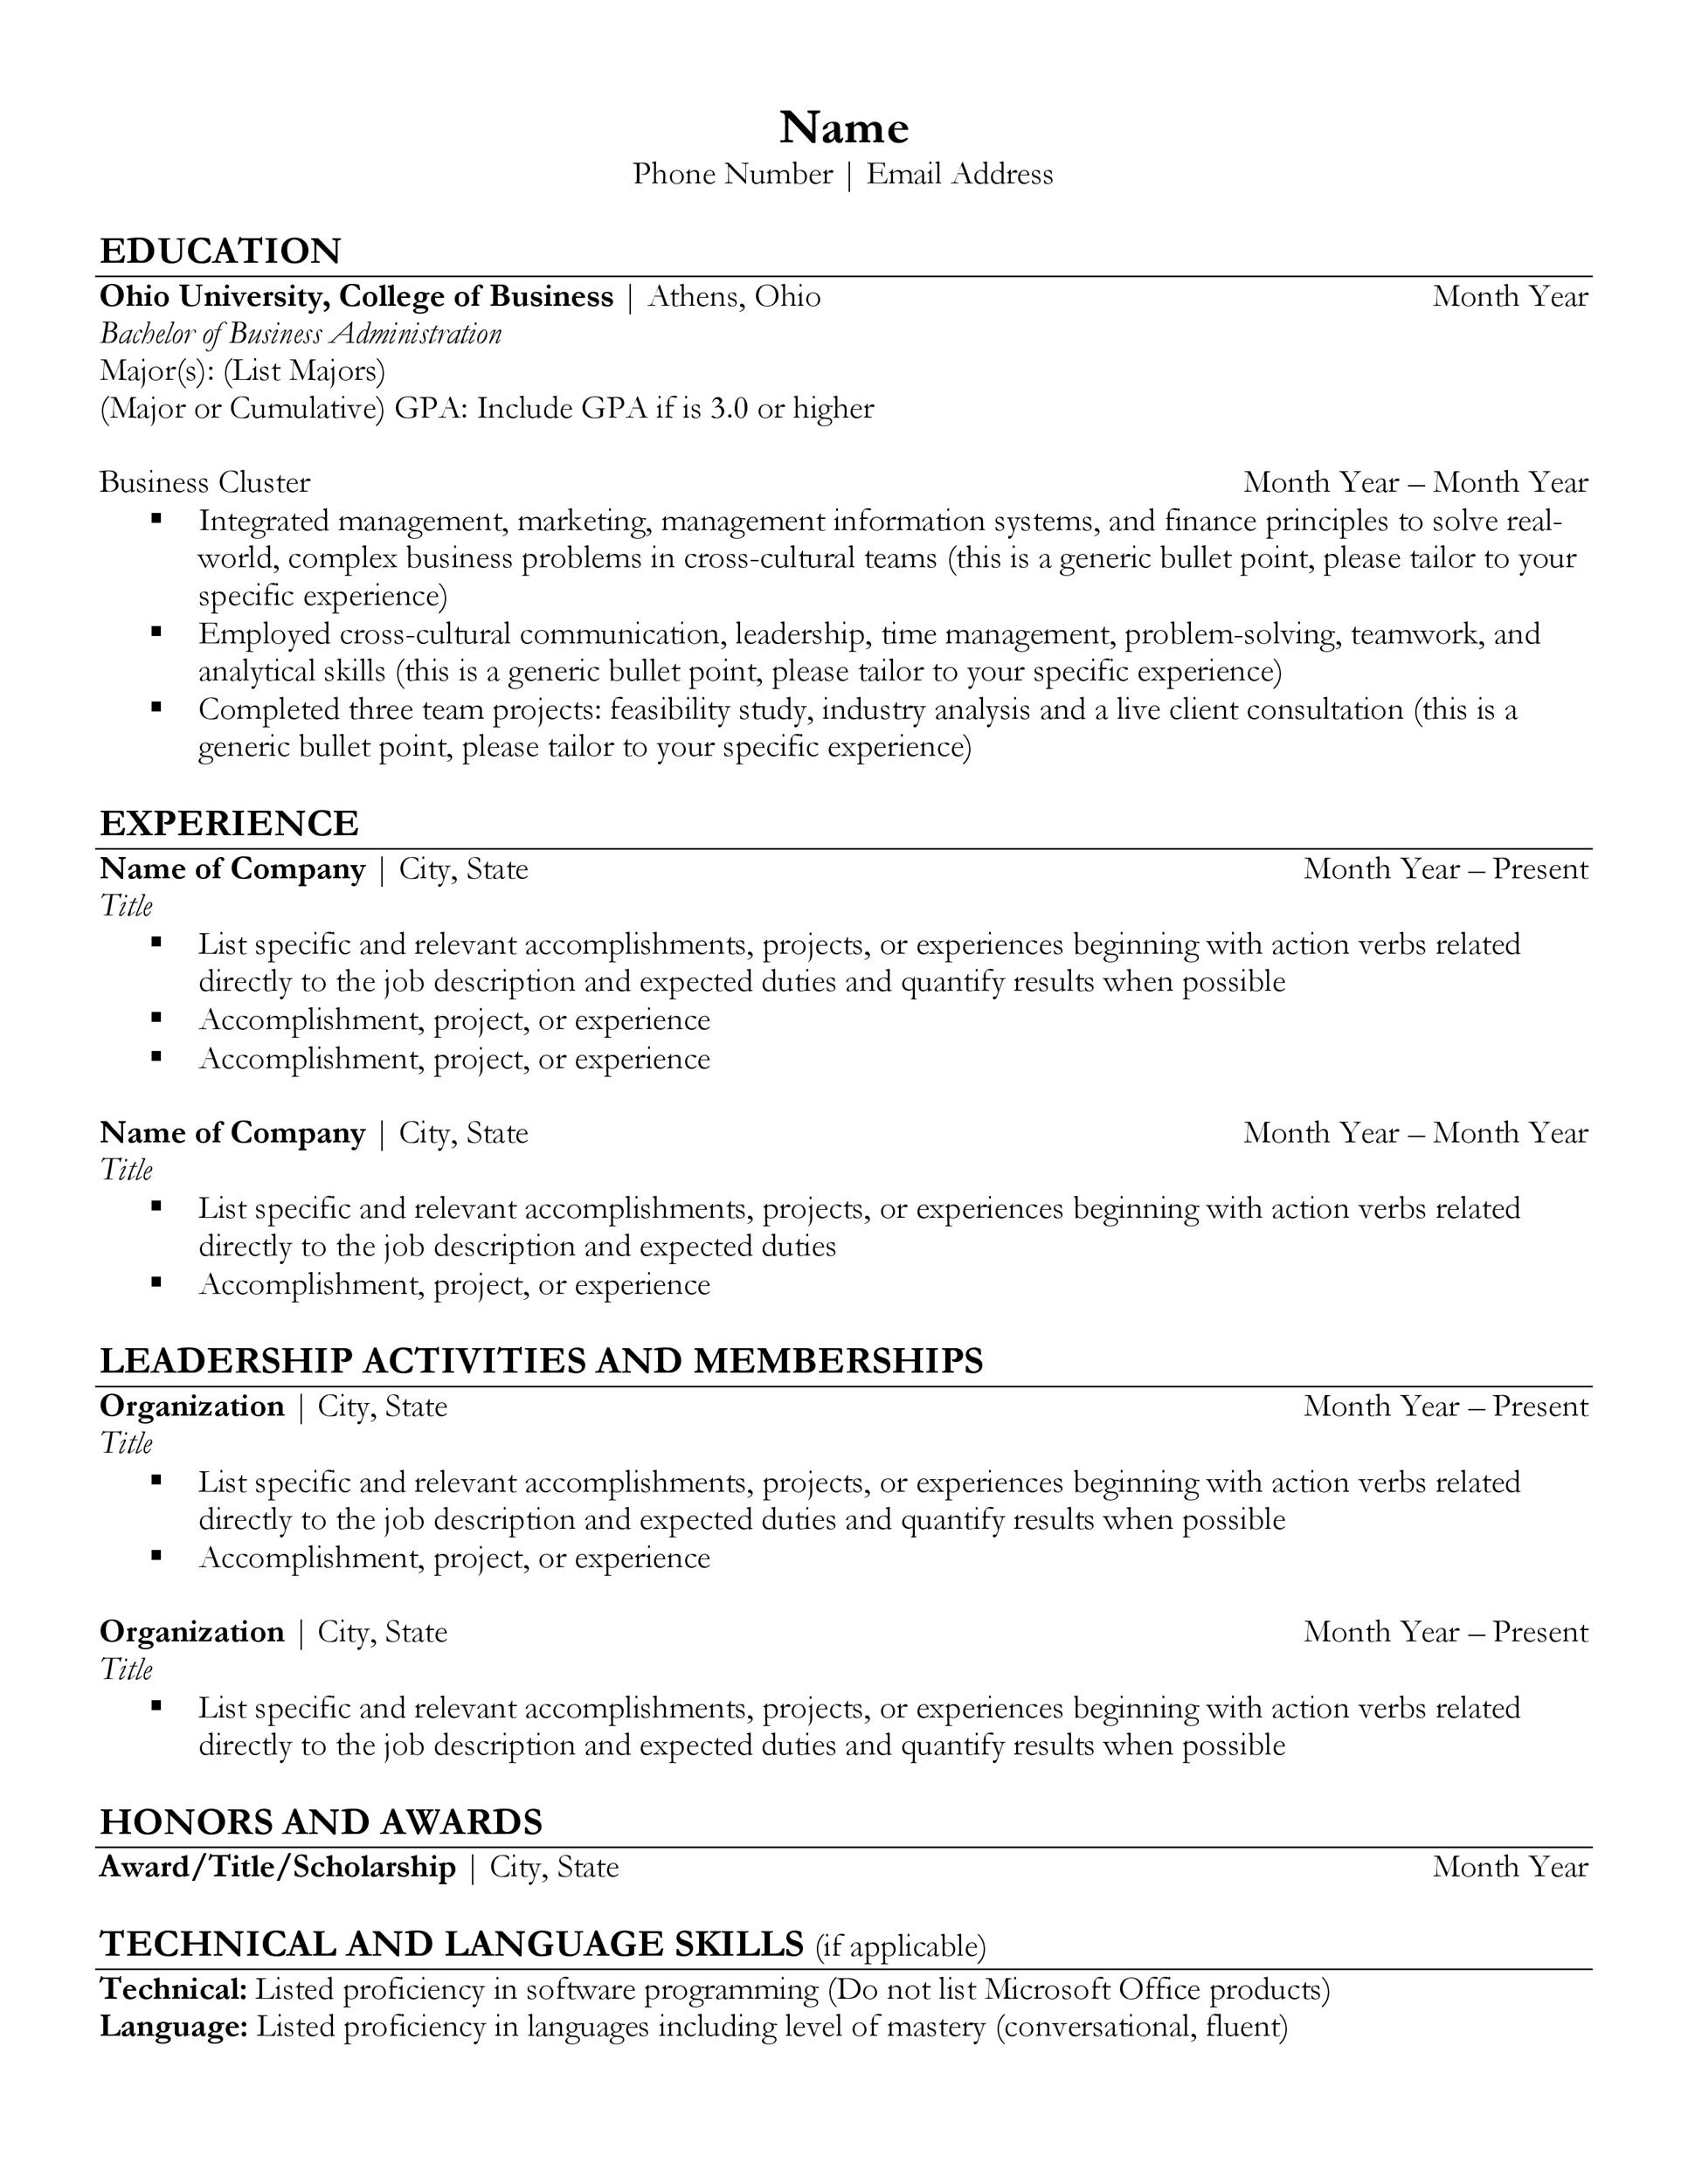 ncsu-resume-template